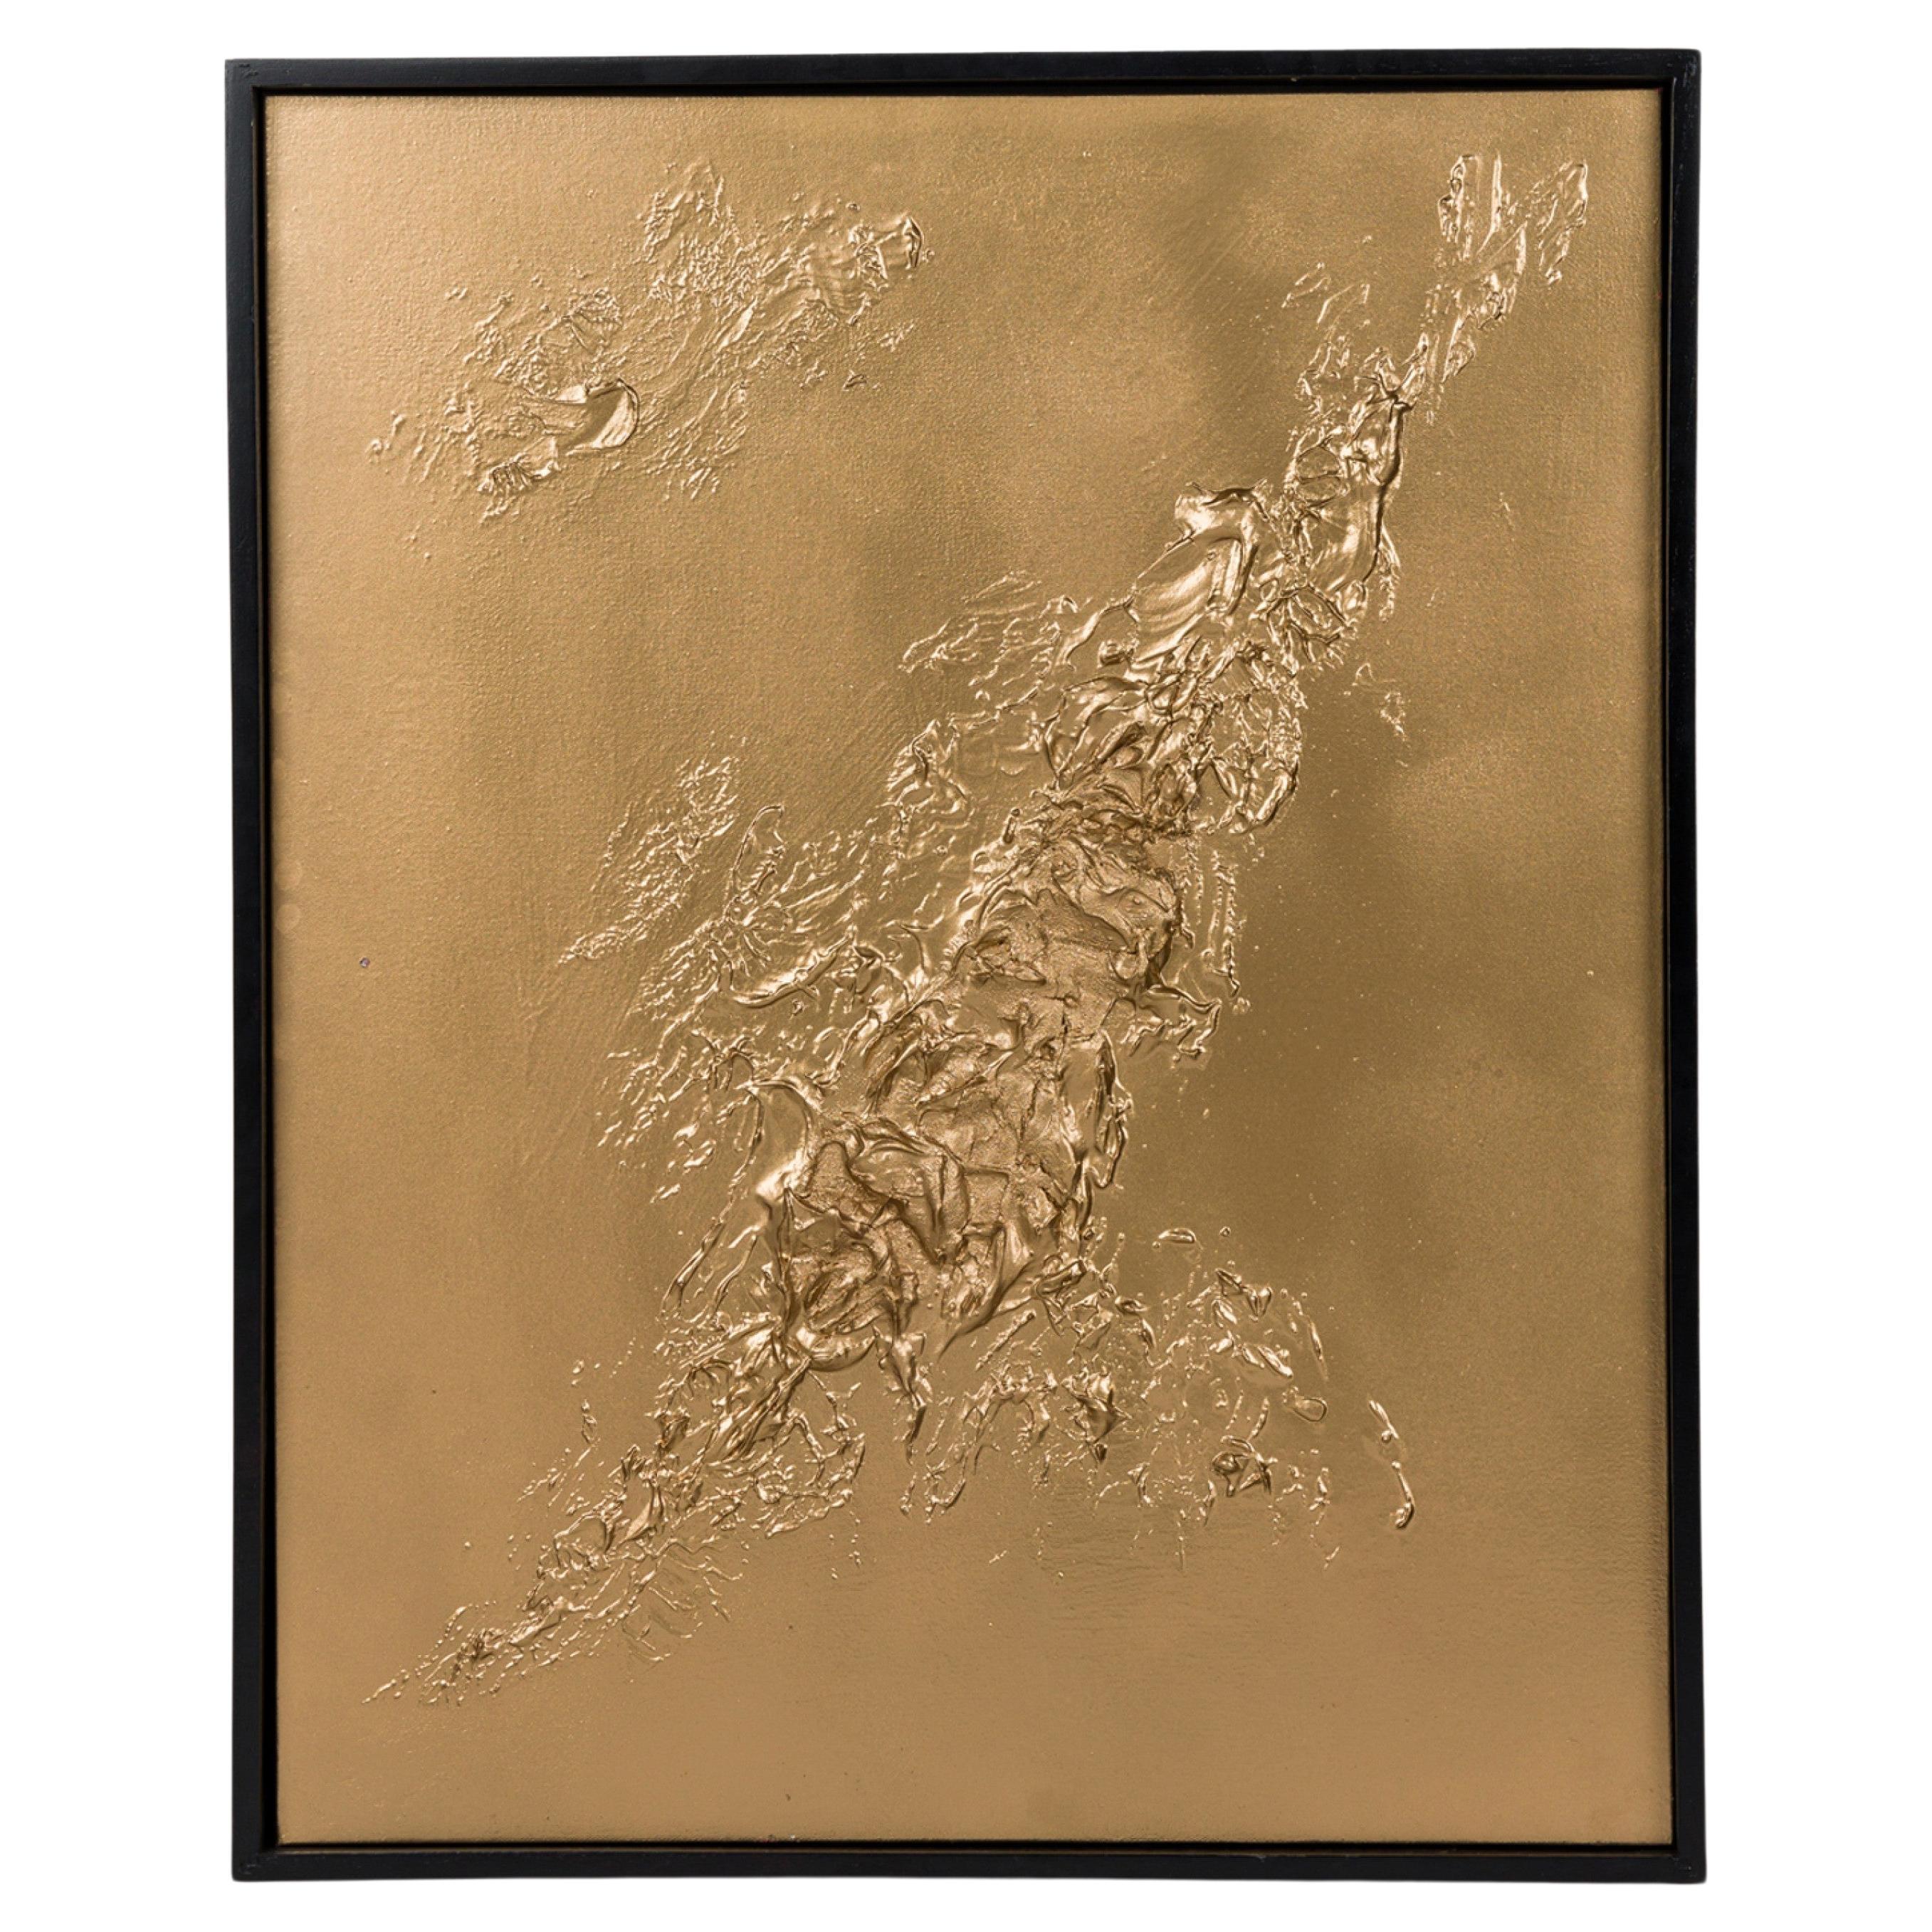 Framed Contemporary Mixed Media Gold Textural Abstract Painting Barbara Kisko For Sale